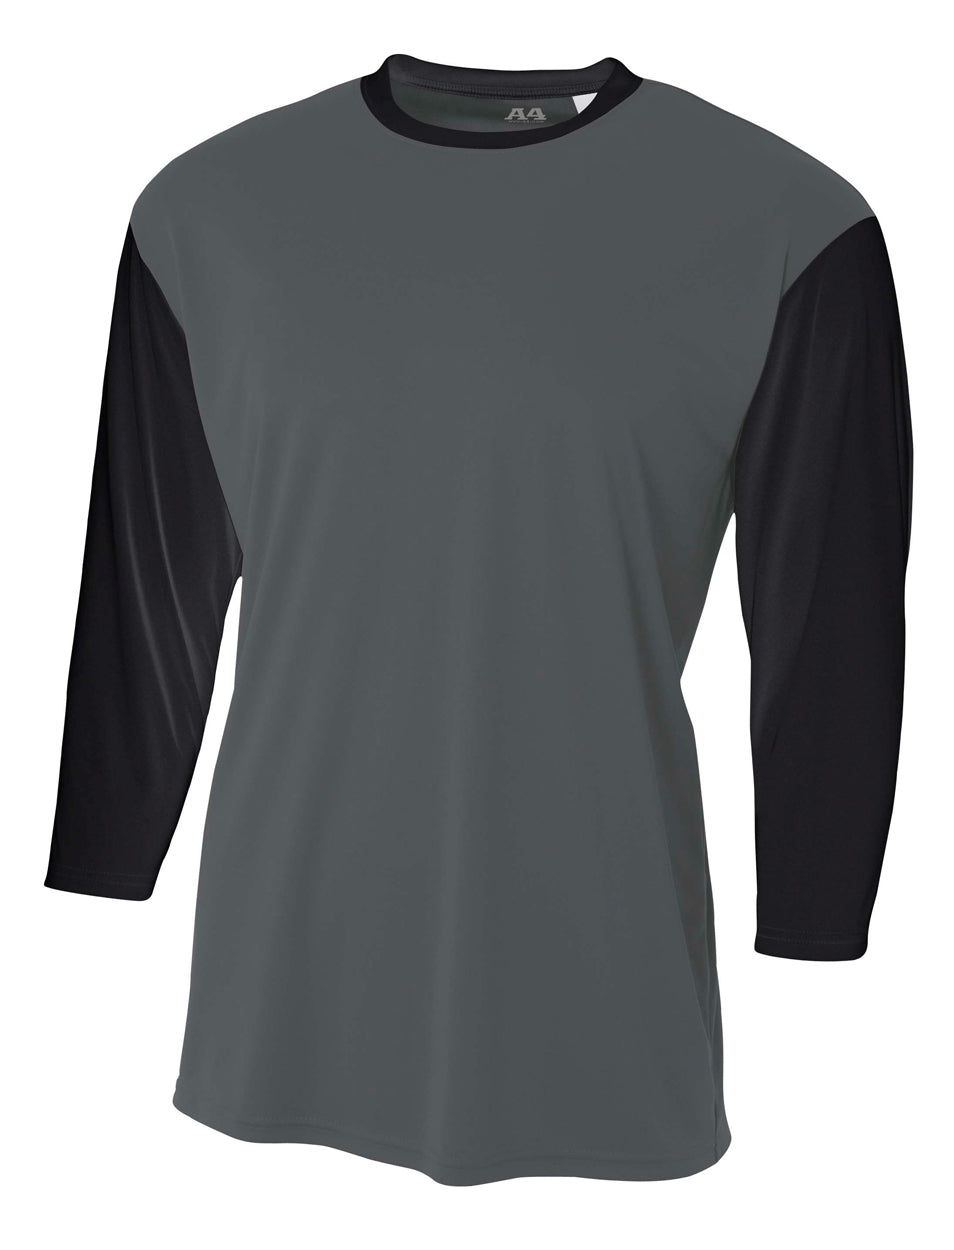 Graphite/black A4 3/4 Sleeve Utility Shirt